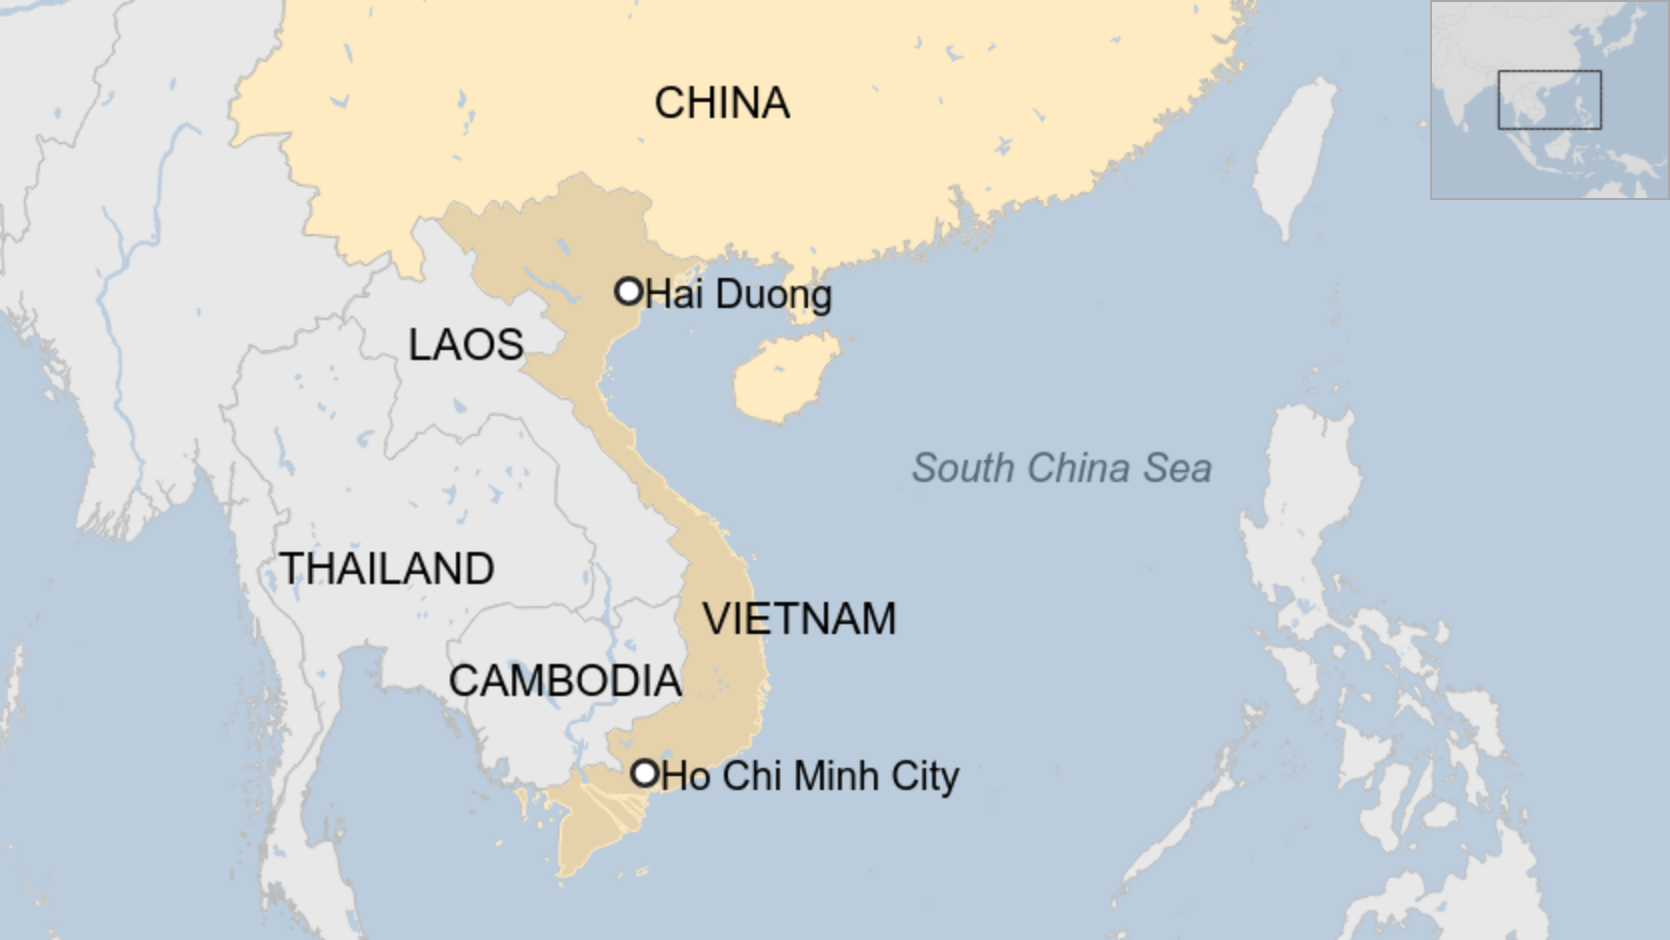 Map of Vietnam and China